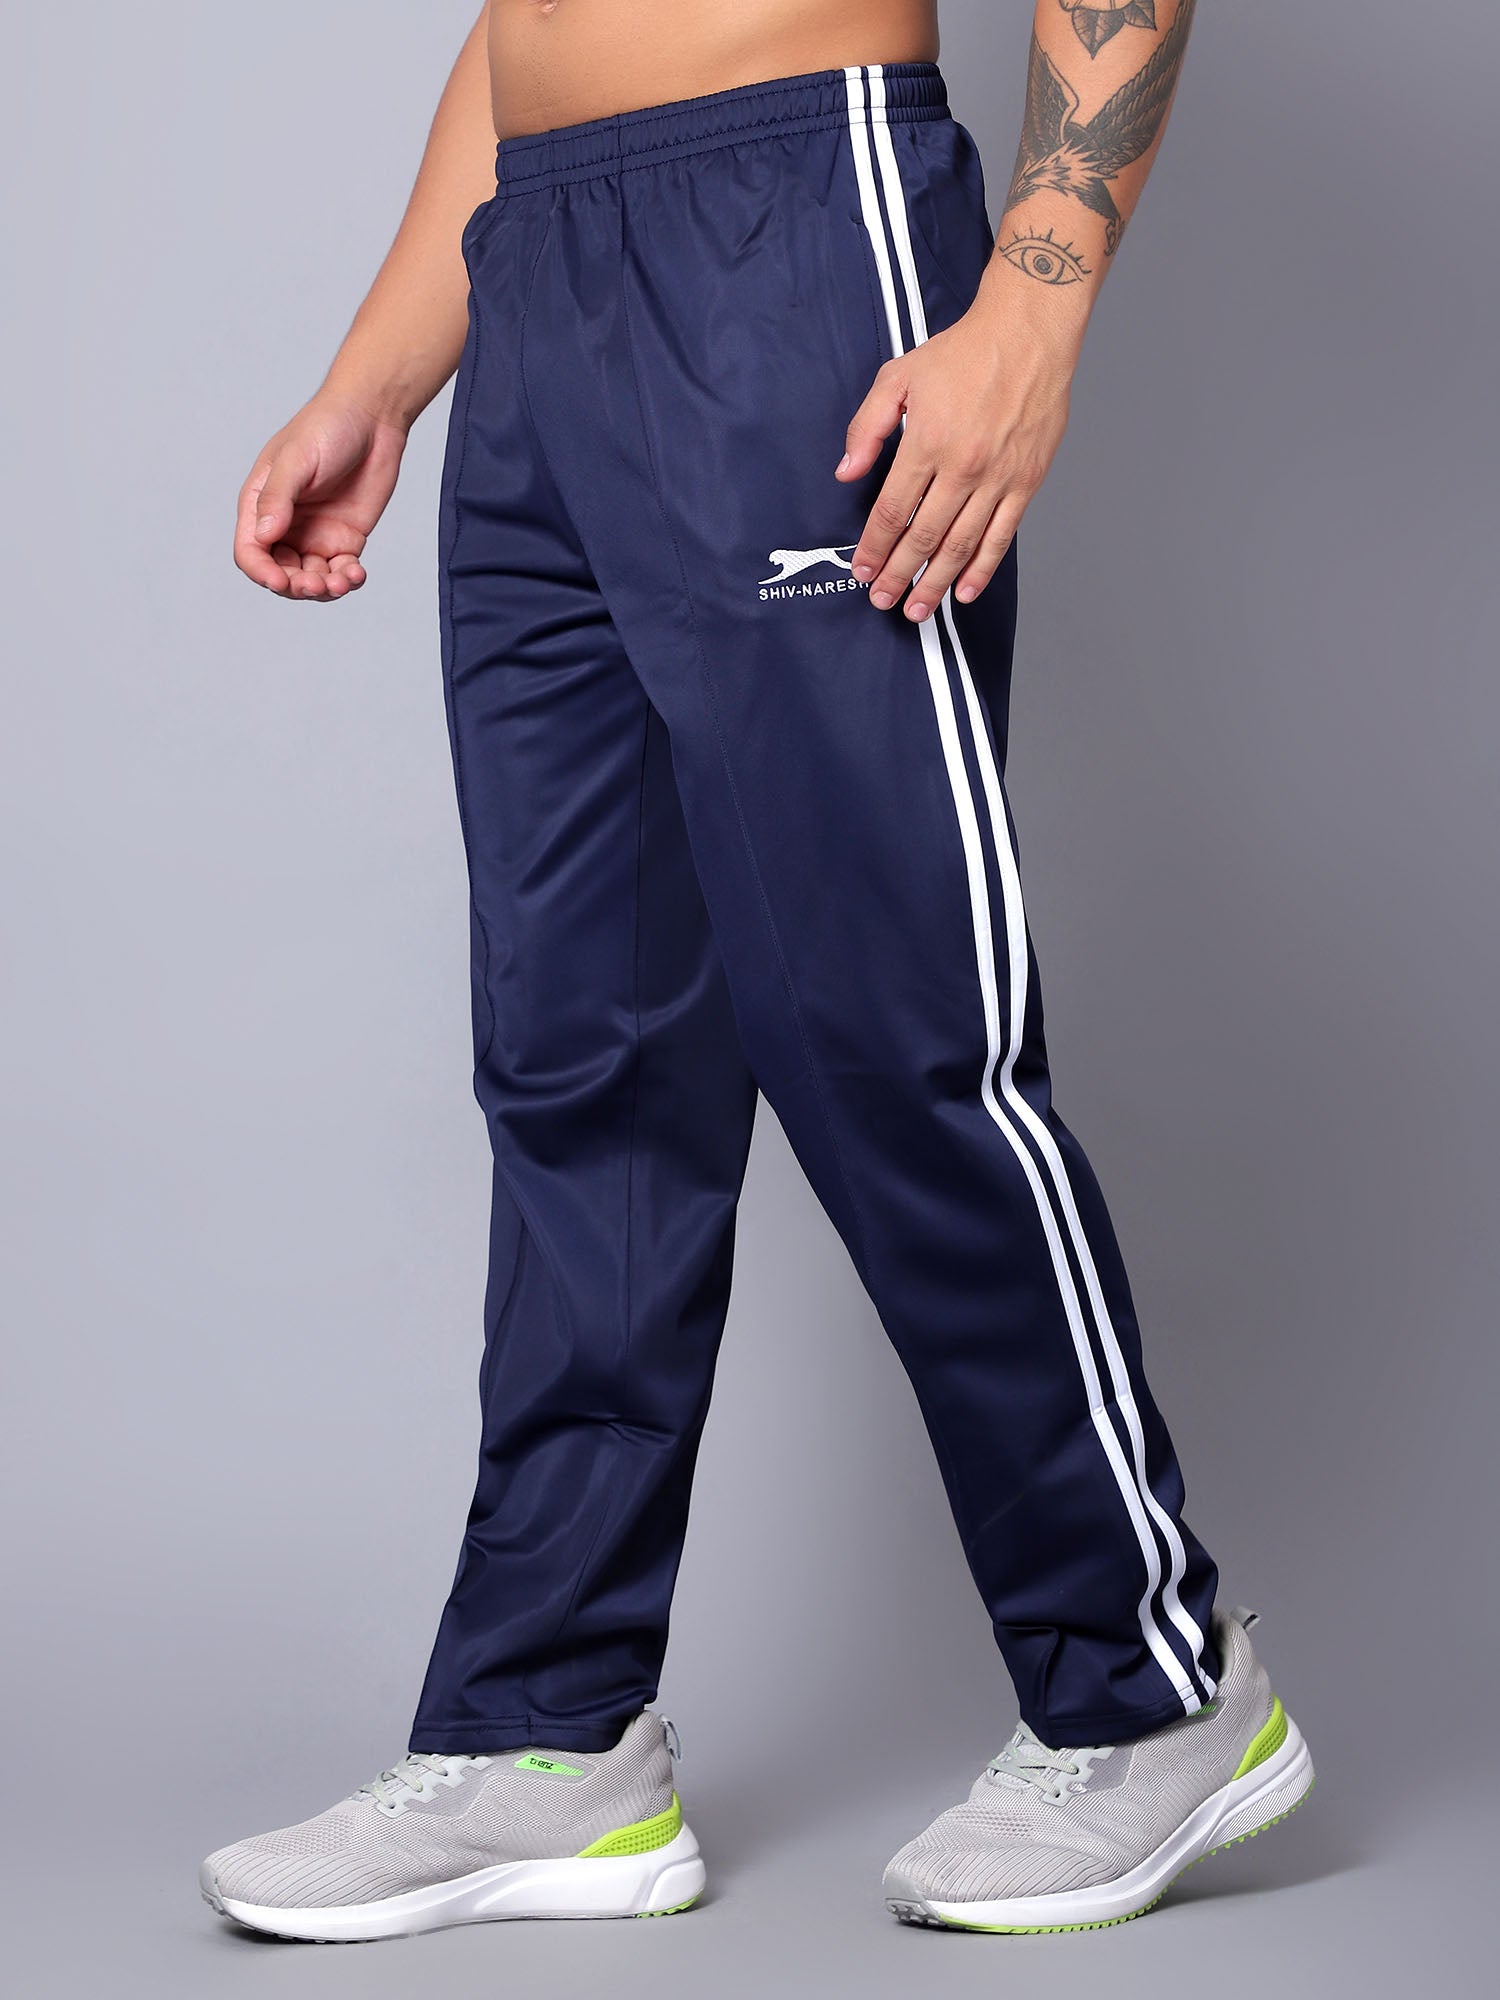 Shiv Naresh Track Pants - Buy Shiv Naresh Track Pants online in India